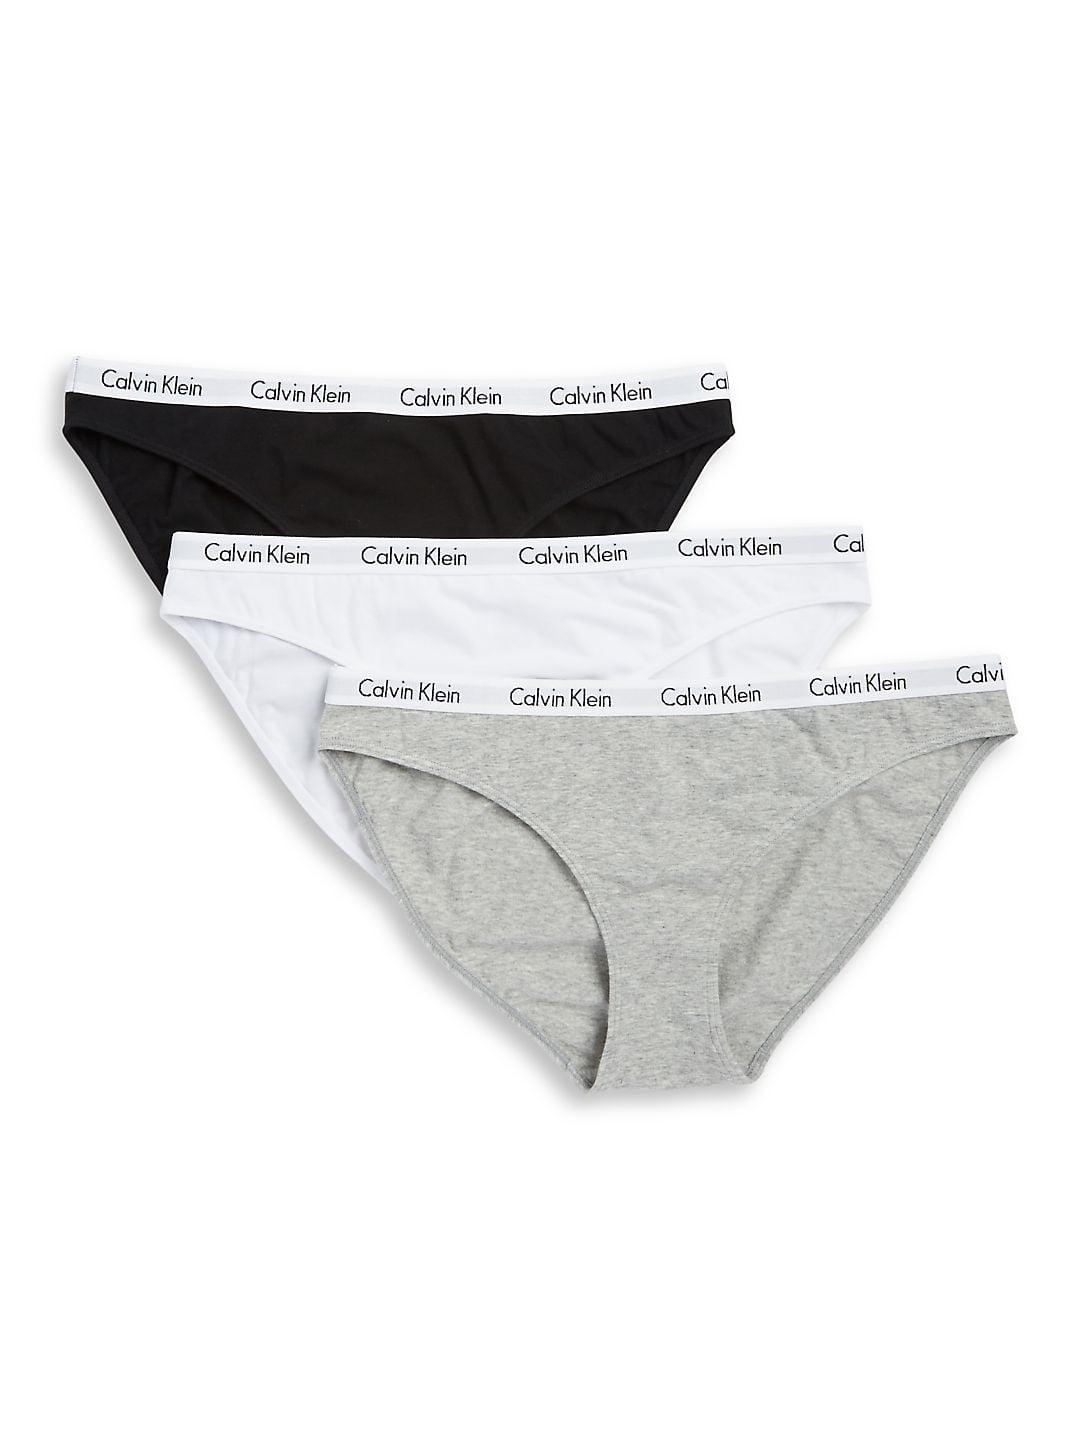 Calvin Klein Underwear Women's Carousel 3 Pack Panties, Multi, Large